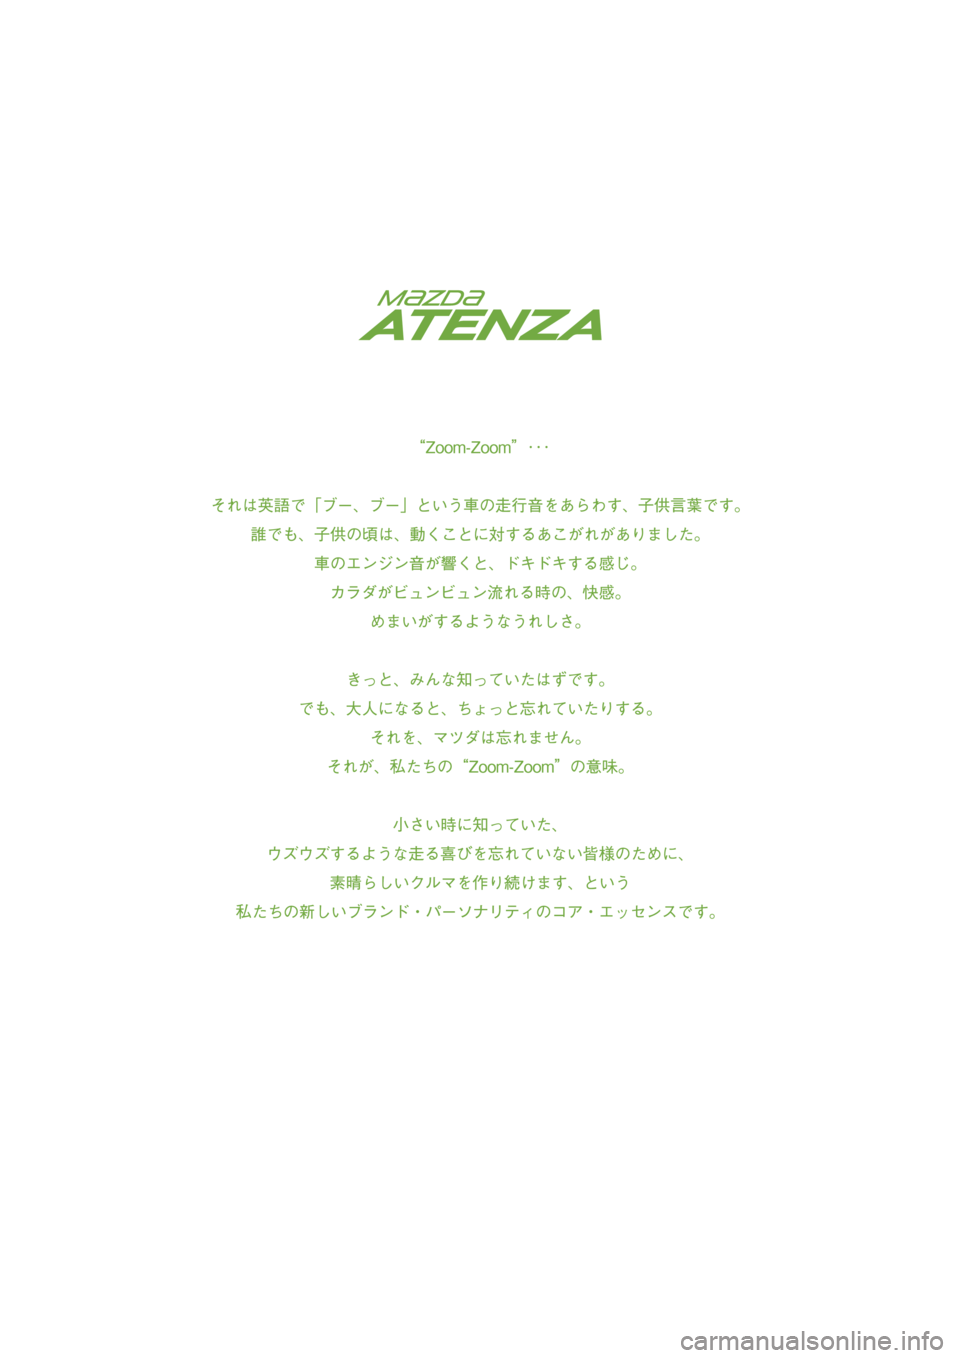 MAZDA MODEL ATENZA 2018  取扱説明書 (アテンザ) (in Japanese) ATENZA_Qト_Edition1_QuickGuide.indb   1ATENZA_Qト_Edition1_QuickGuide.indb   12017/07/06   18:56:582017/07/06   18:56:58 